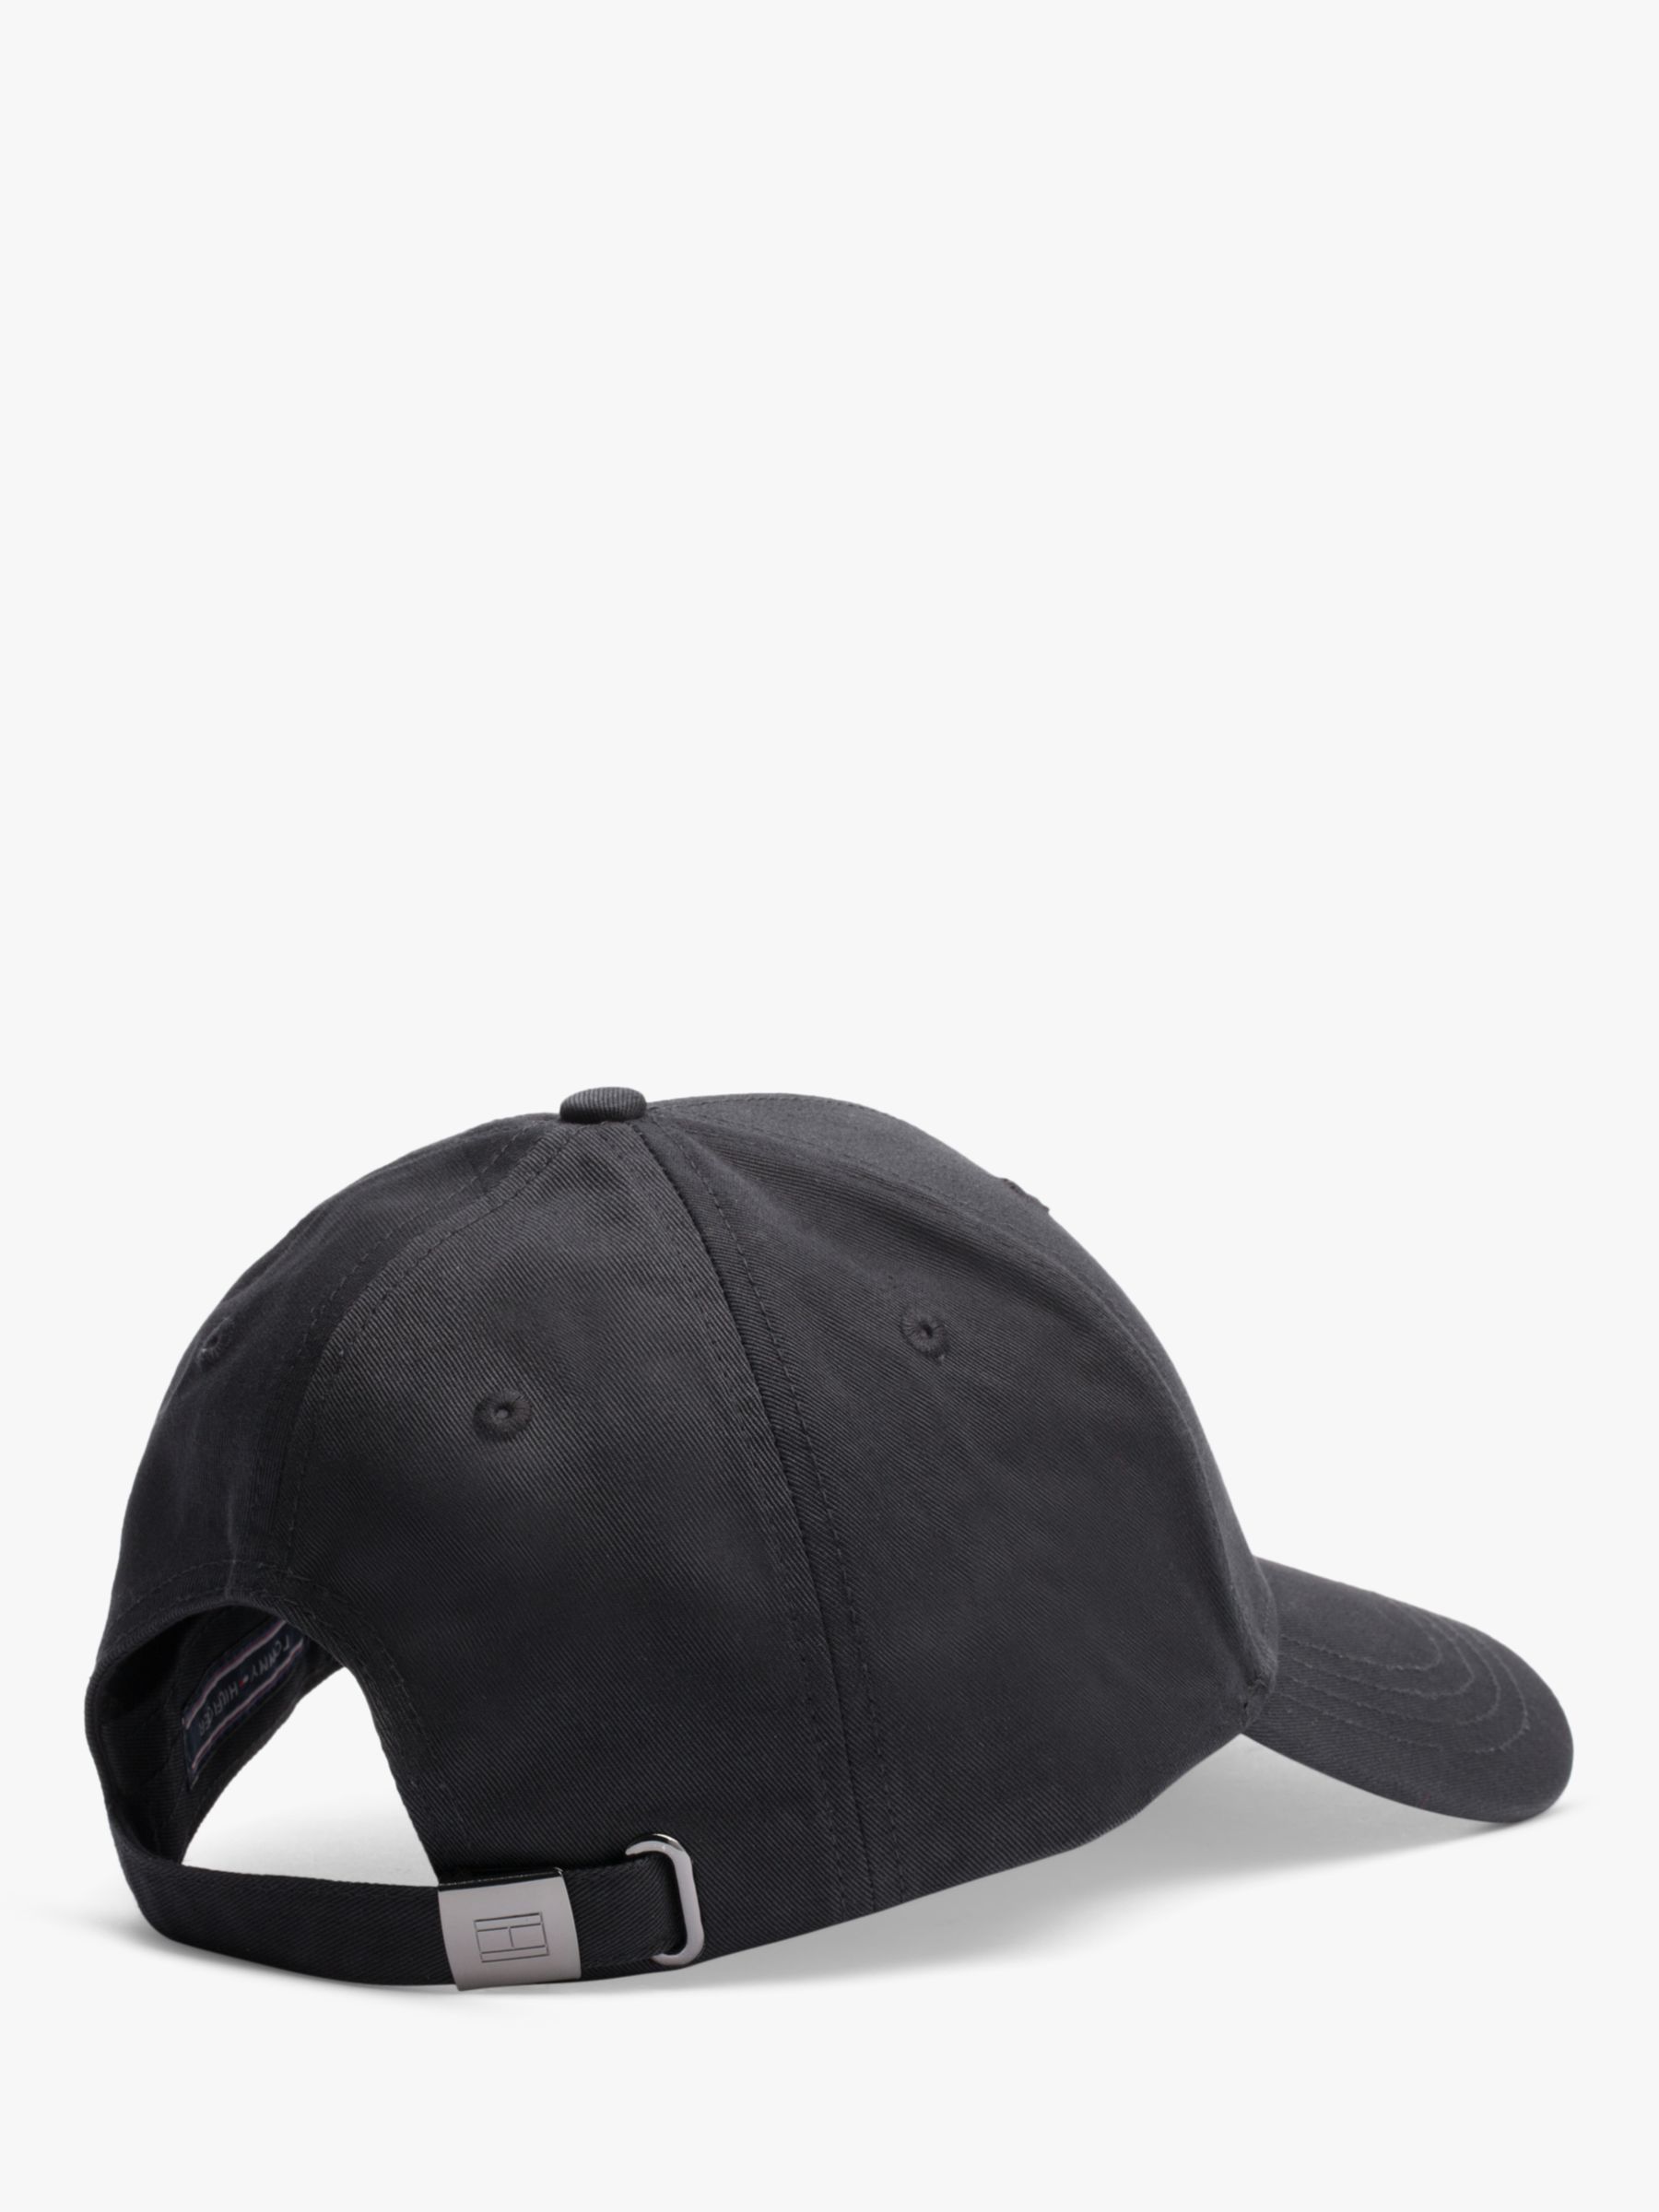 Tommy Hilfiger Classic Baseball Cap, One Size, Flag Black, One Size